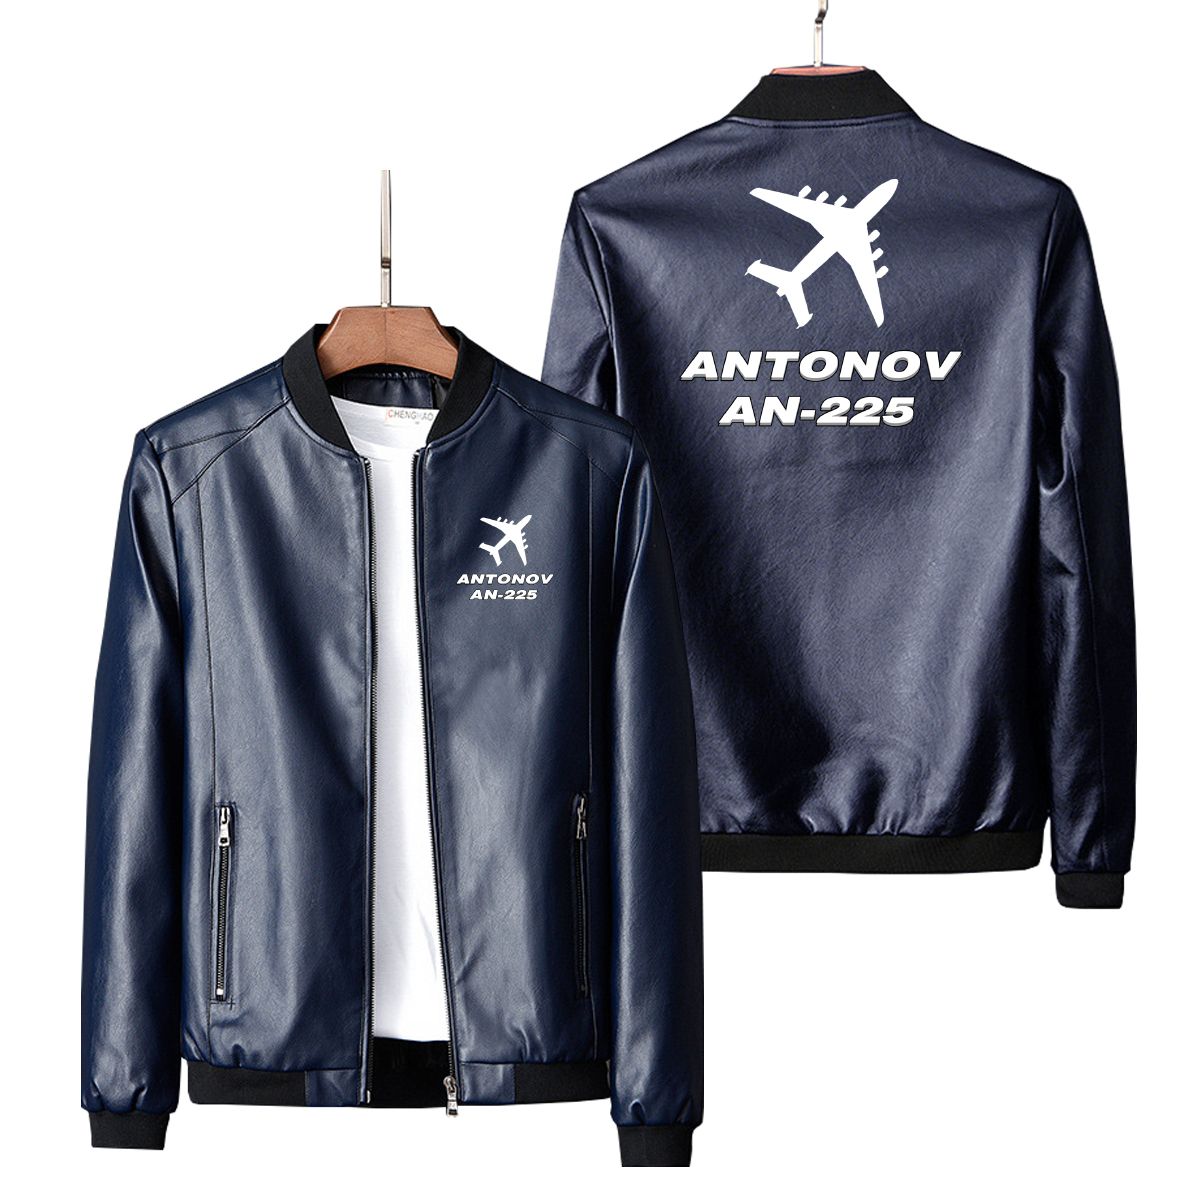 Antonov AN-225 (28) Designed PU Leather Jackets